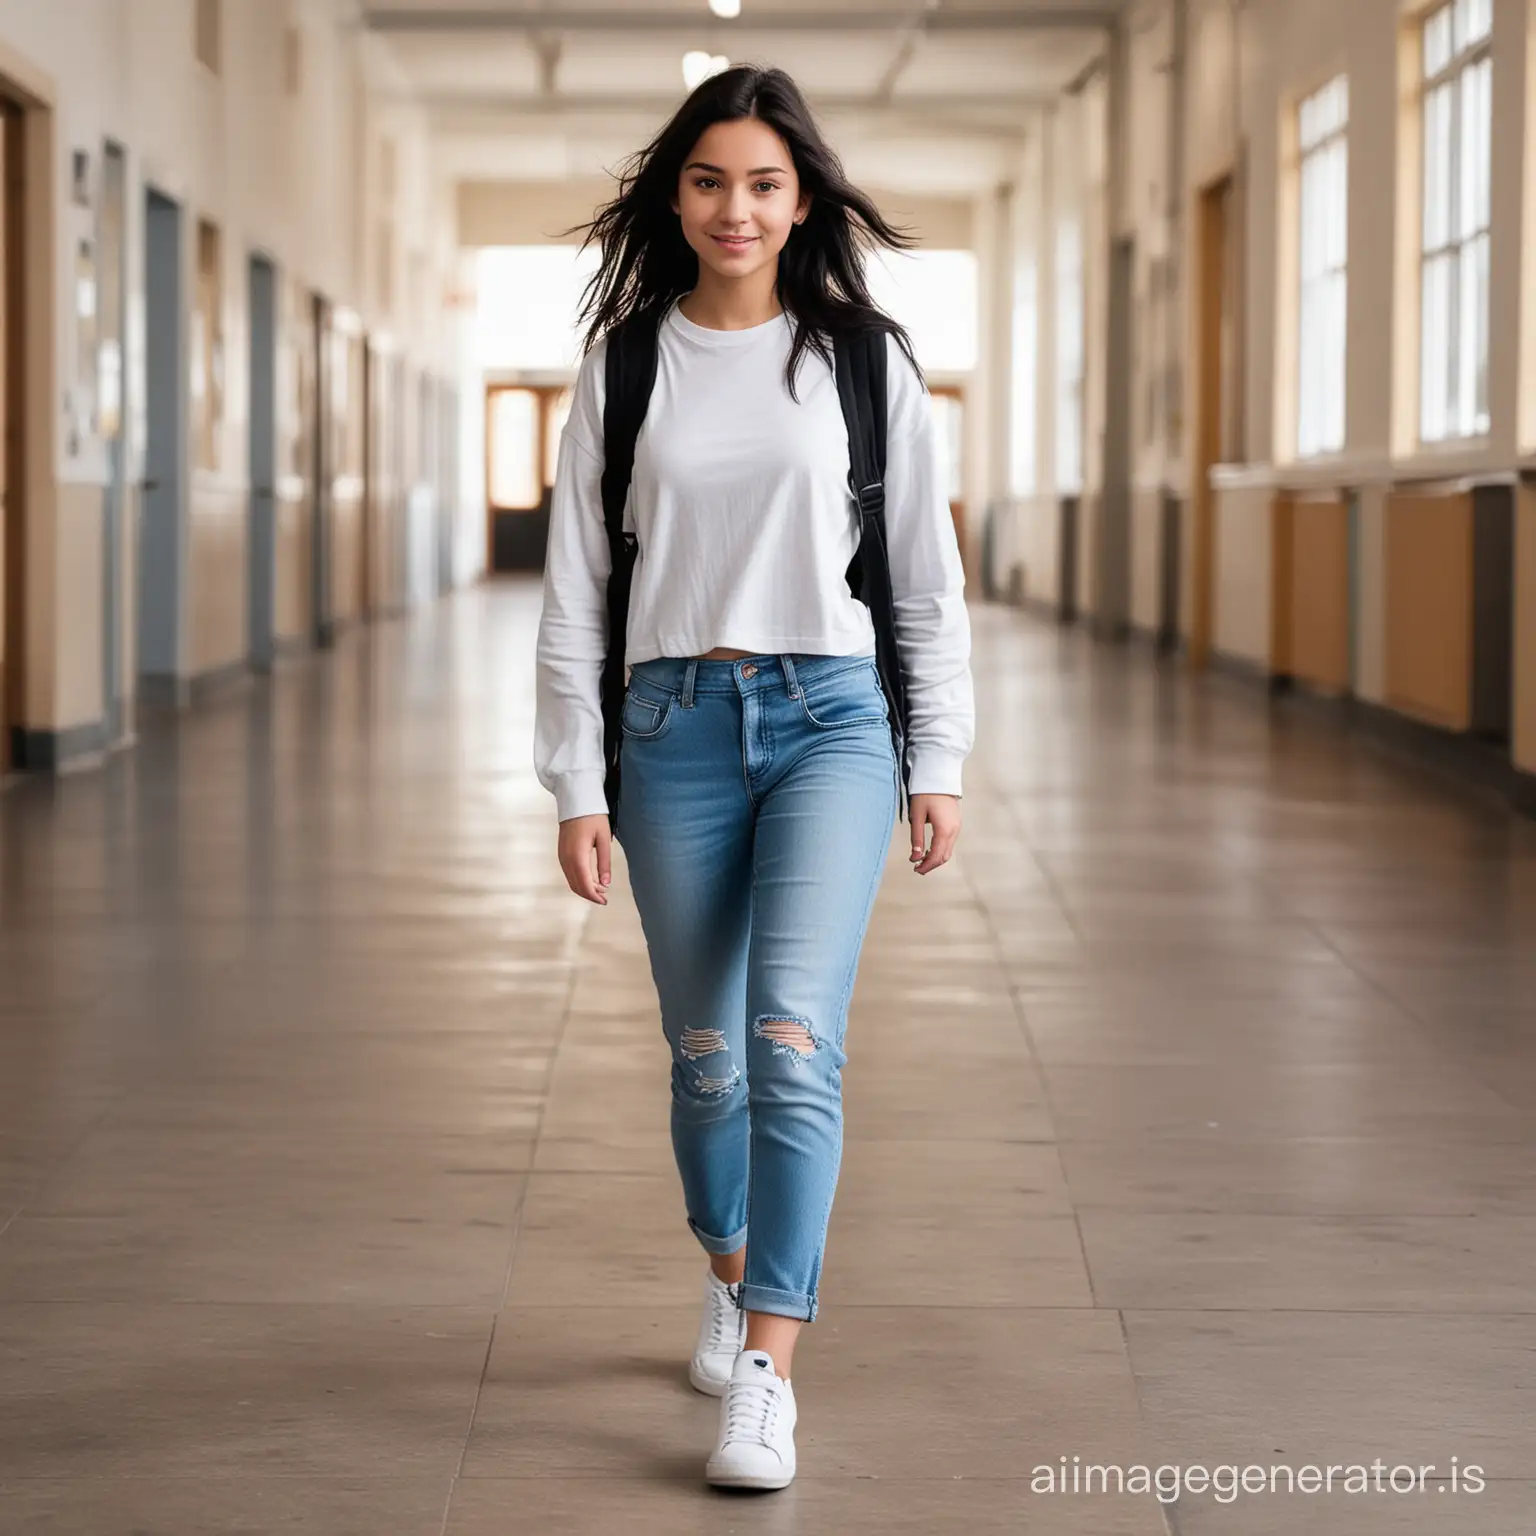 Stylish-Teenage-Girl-Walking-in-Casual-Street-Wear-at-School